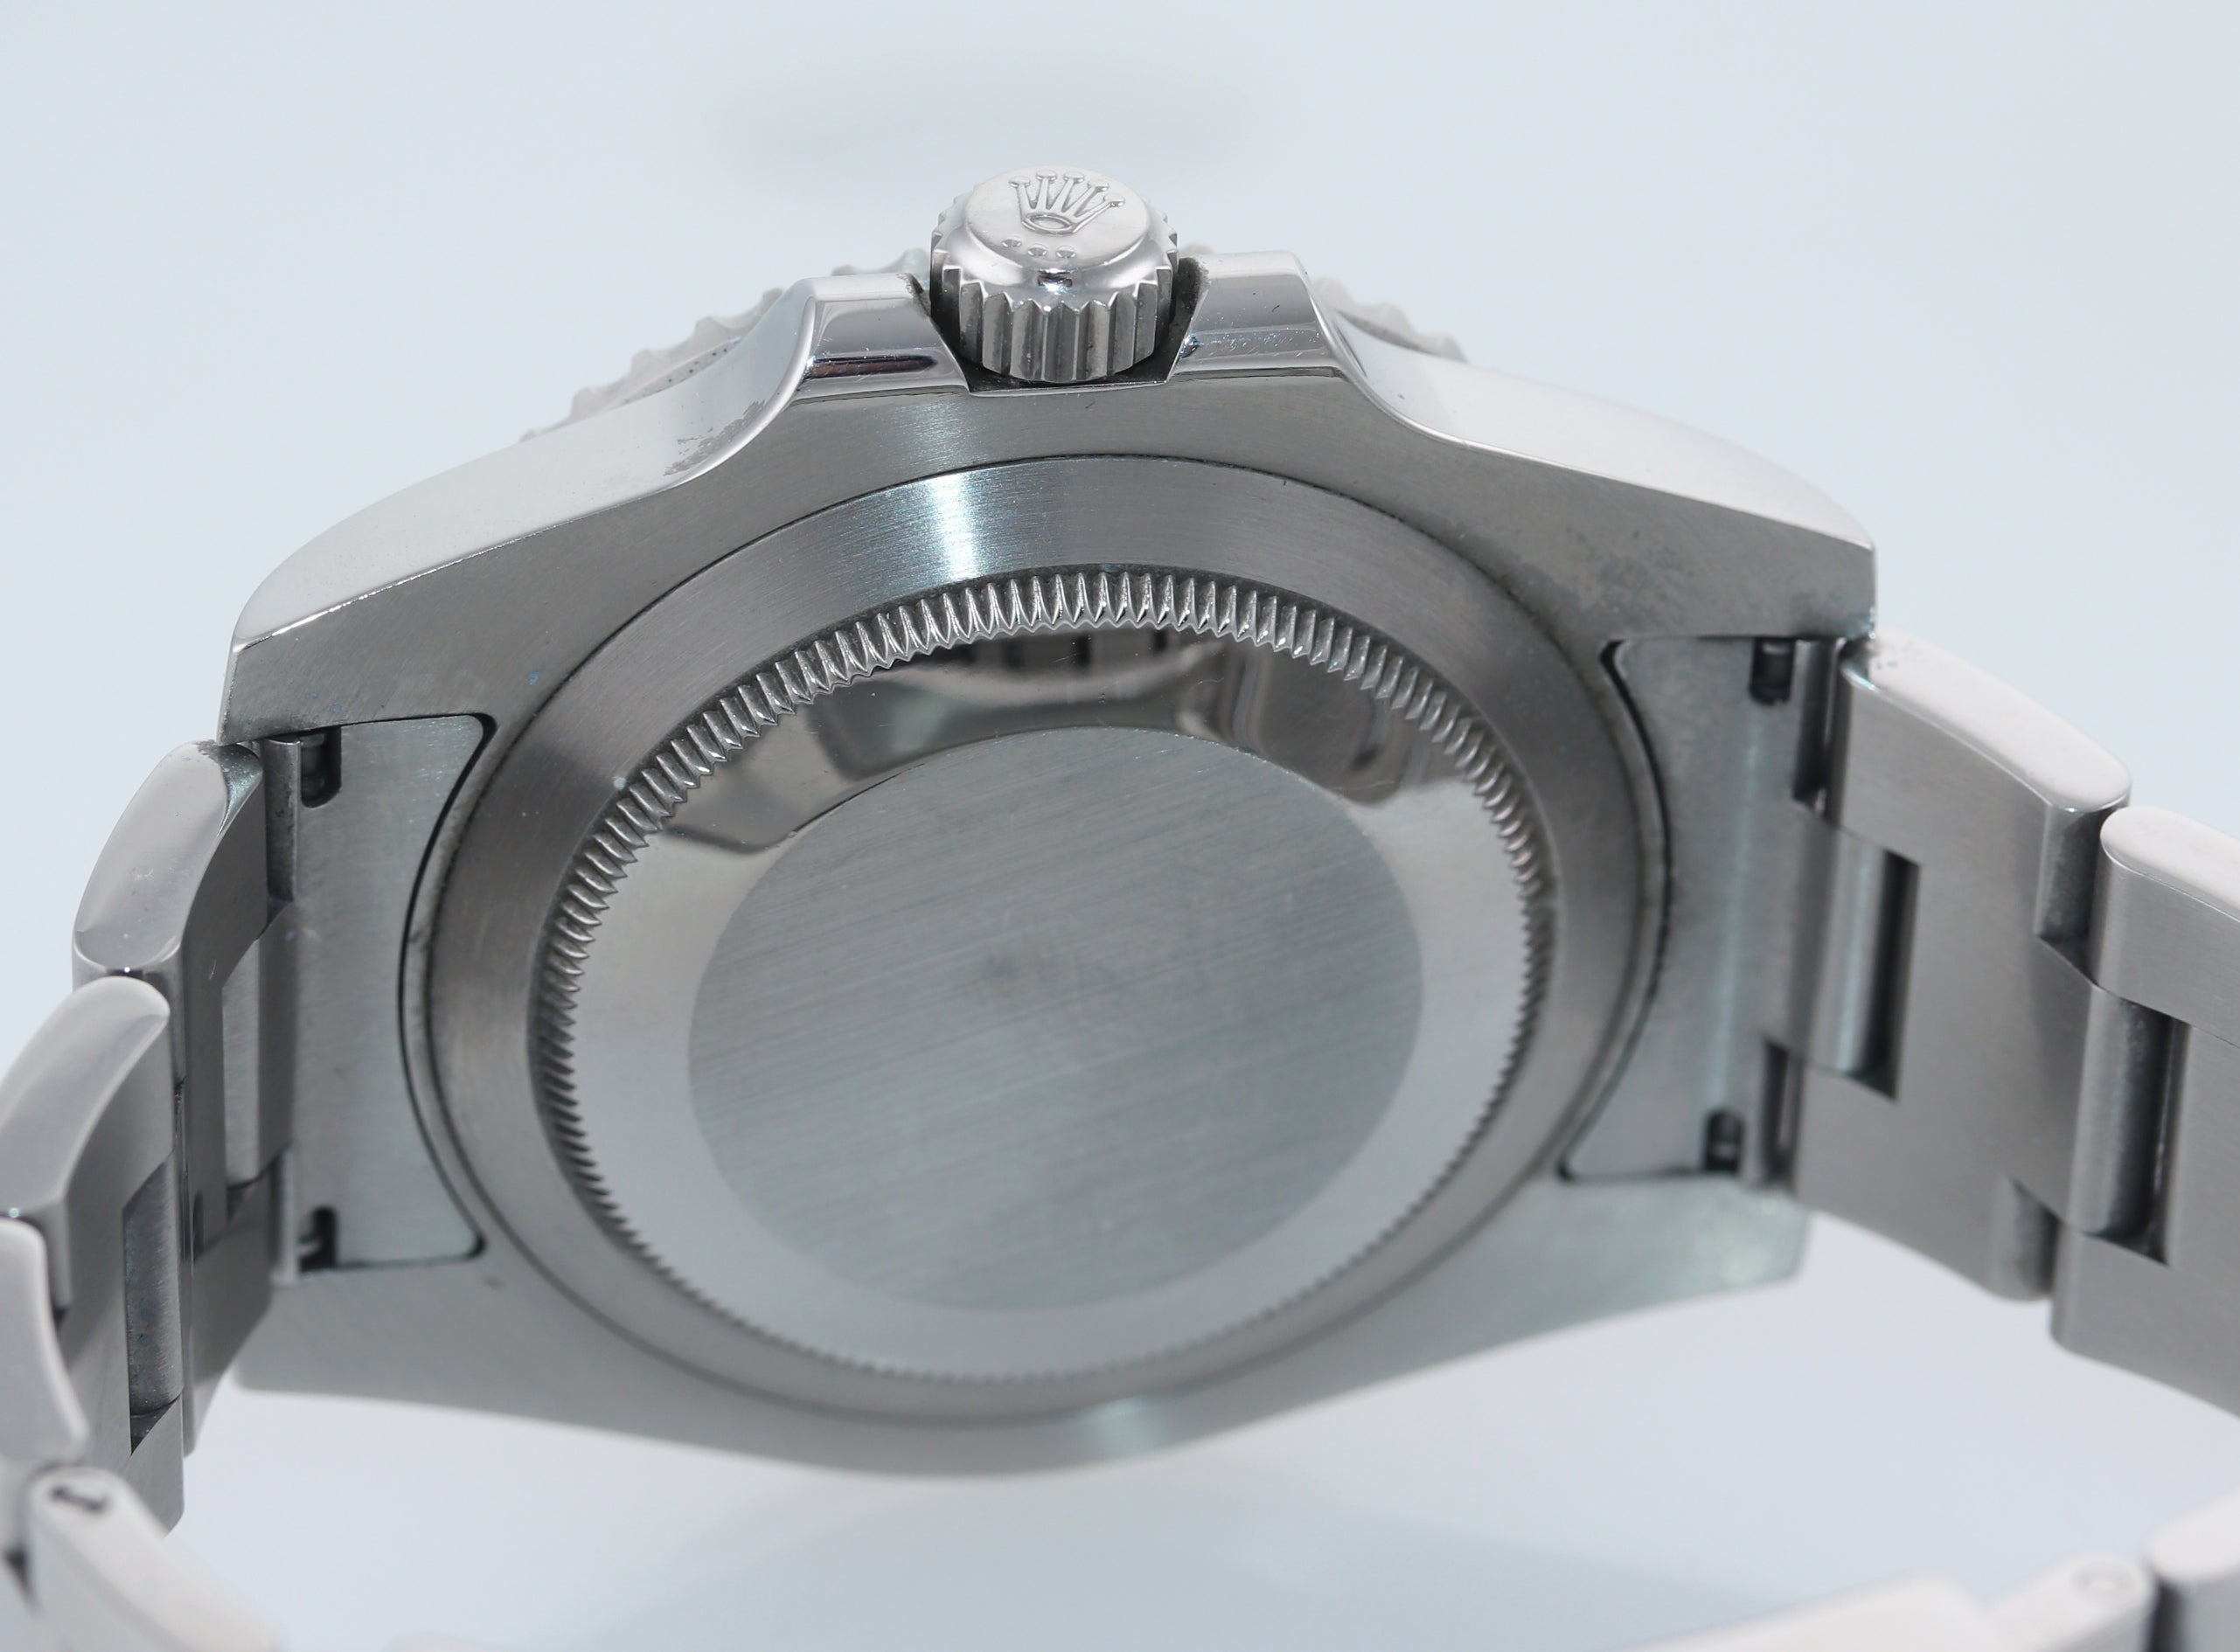 PAPERS & 2019 RSC Rolex Submariner Date 116610 Steel Black Ceramic 40mm Watch